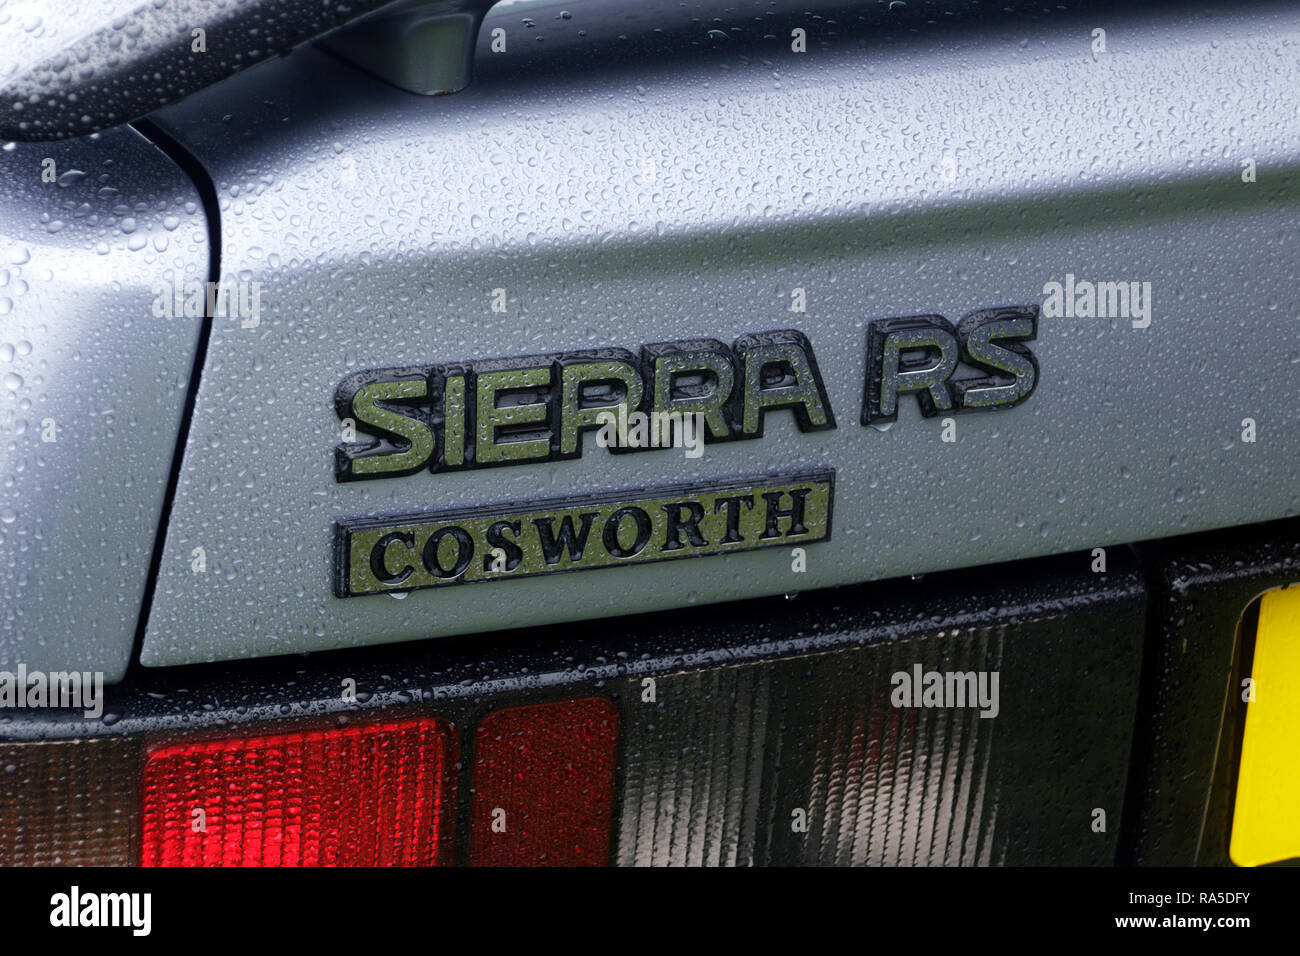 ⭐ New Monogram Rs Ford Sierra Cosworth 4x4 Sapphire Logo Badge Acronym